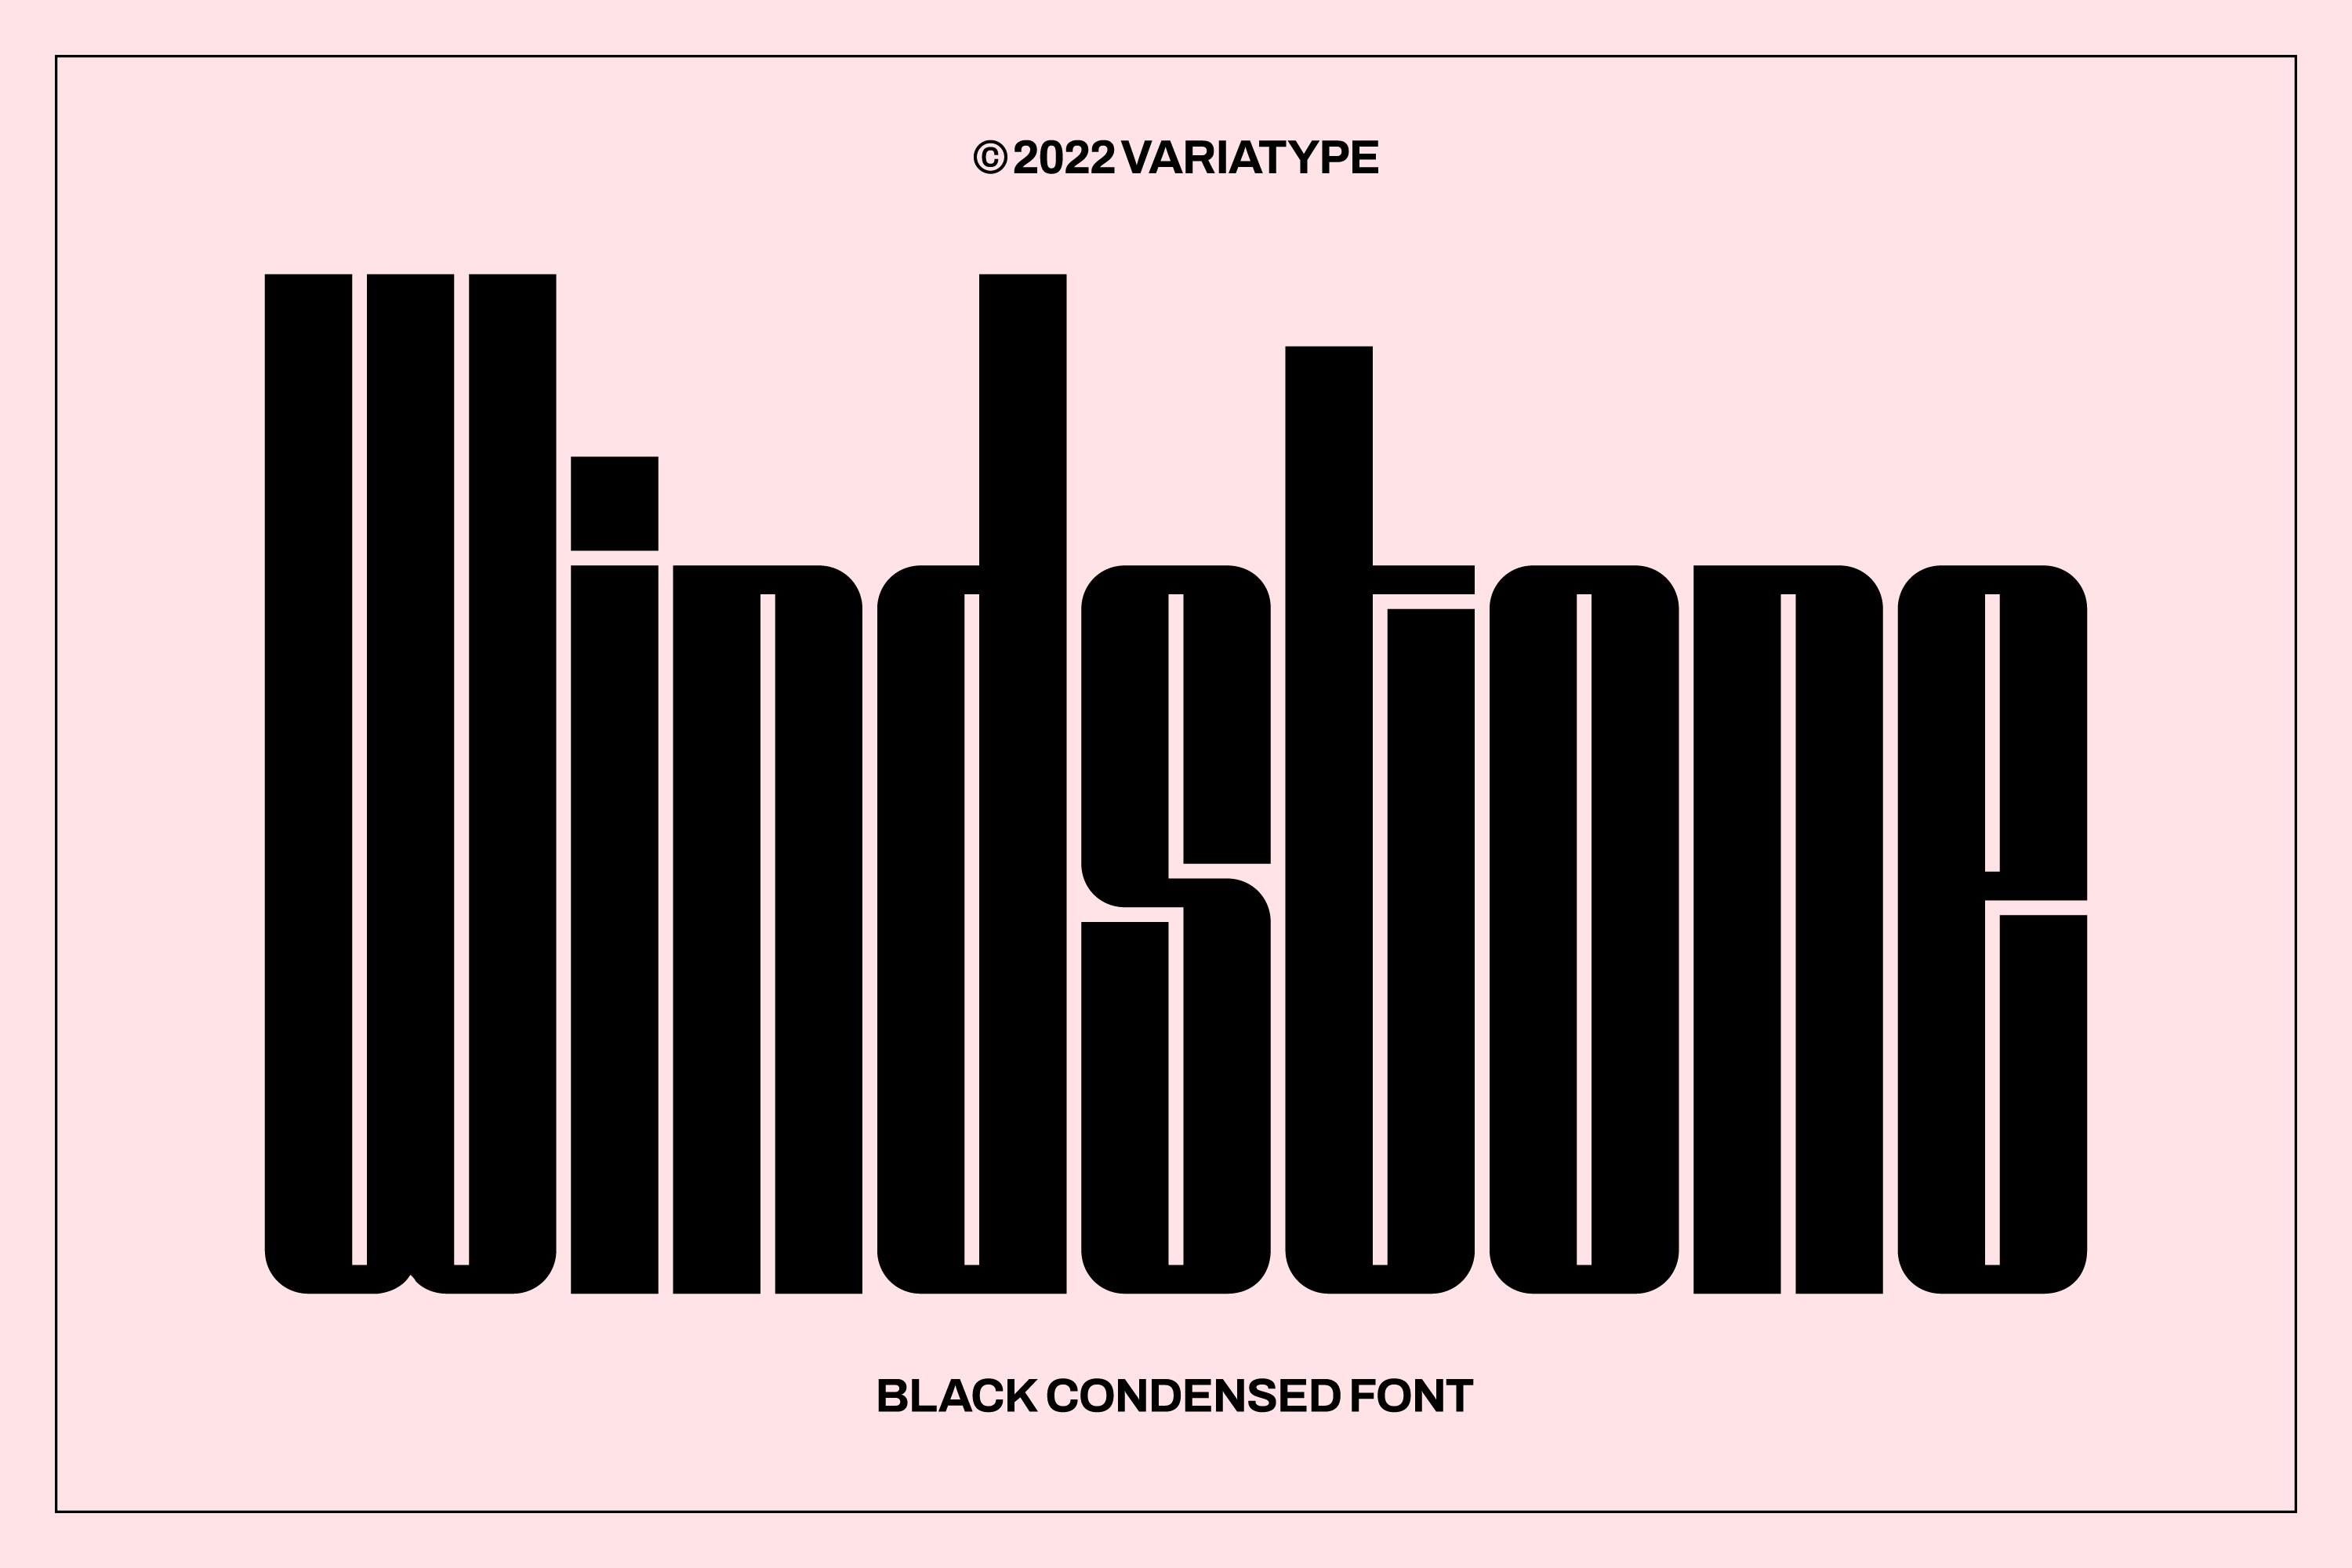 Windstone - Black Condensed Font cover image.